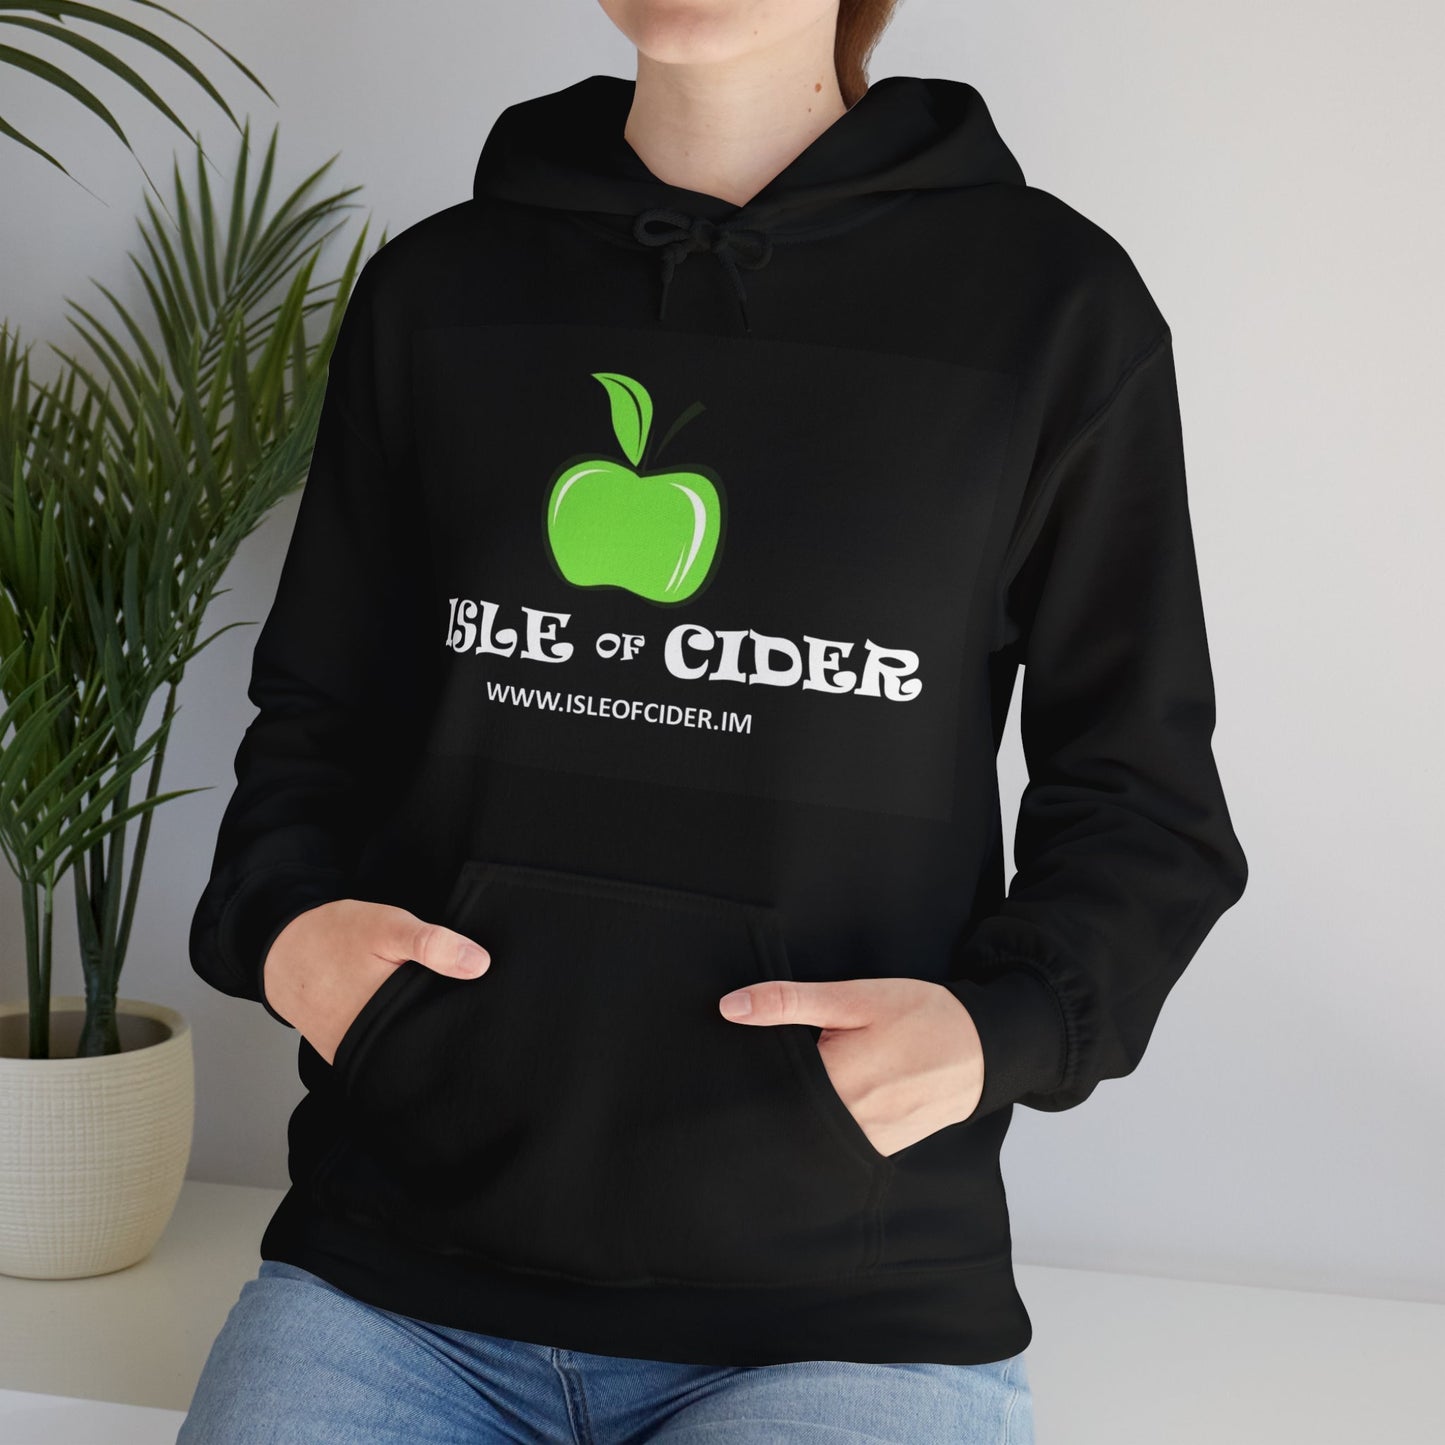 Isle of Cider logo hoodie